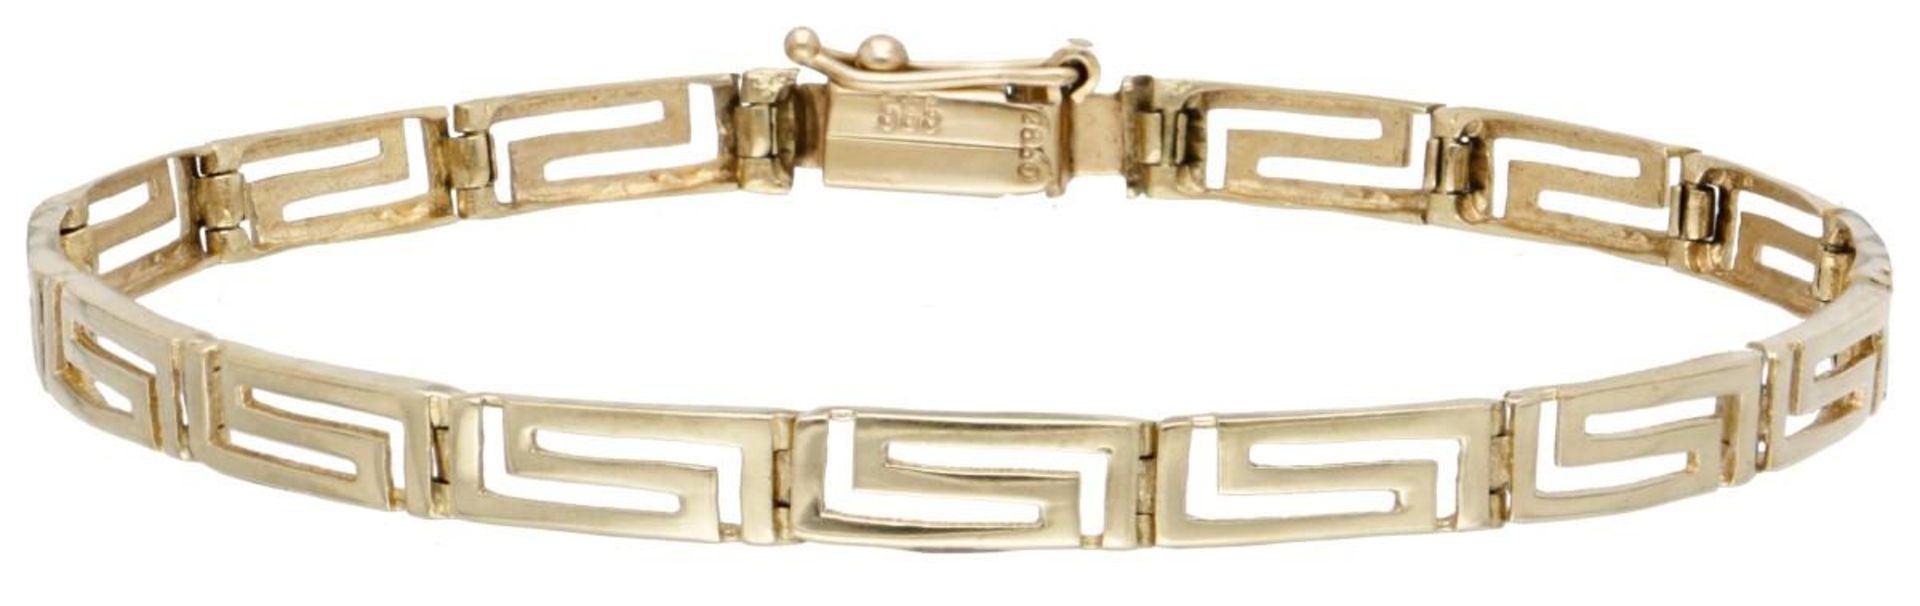 14K. Yellow gold link bracelet with meander motif.